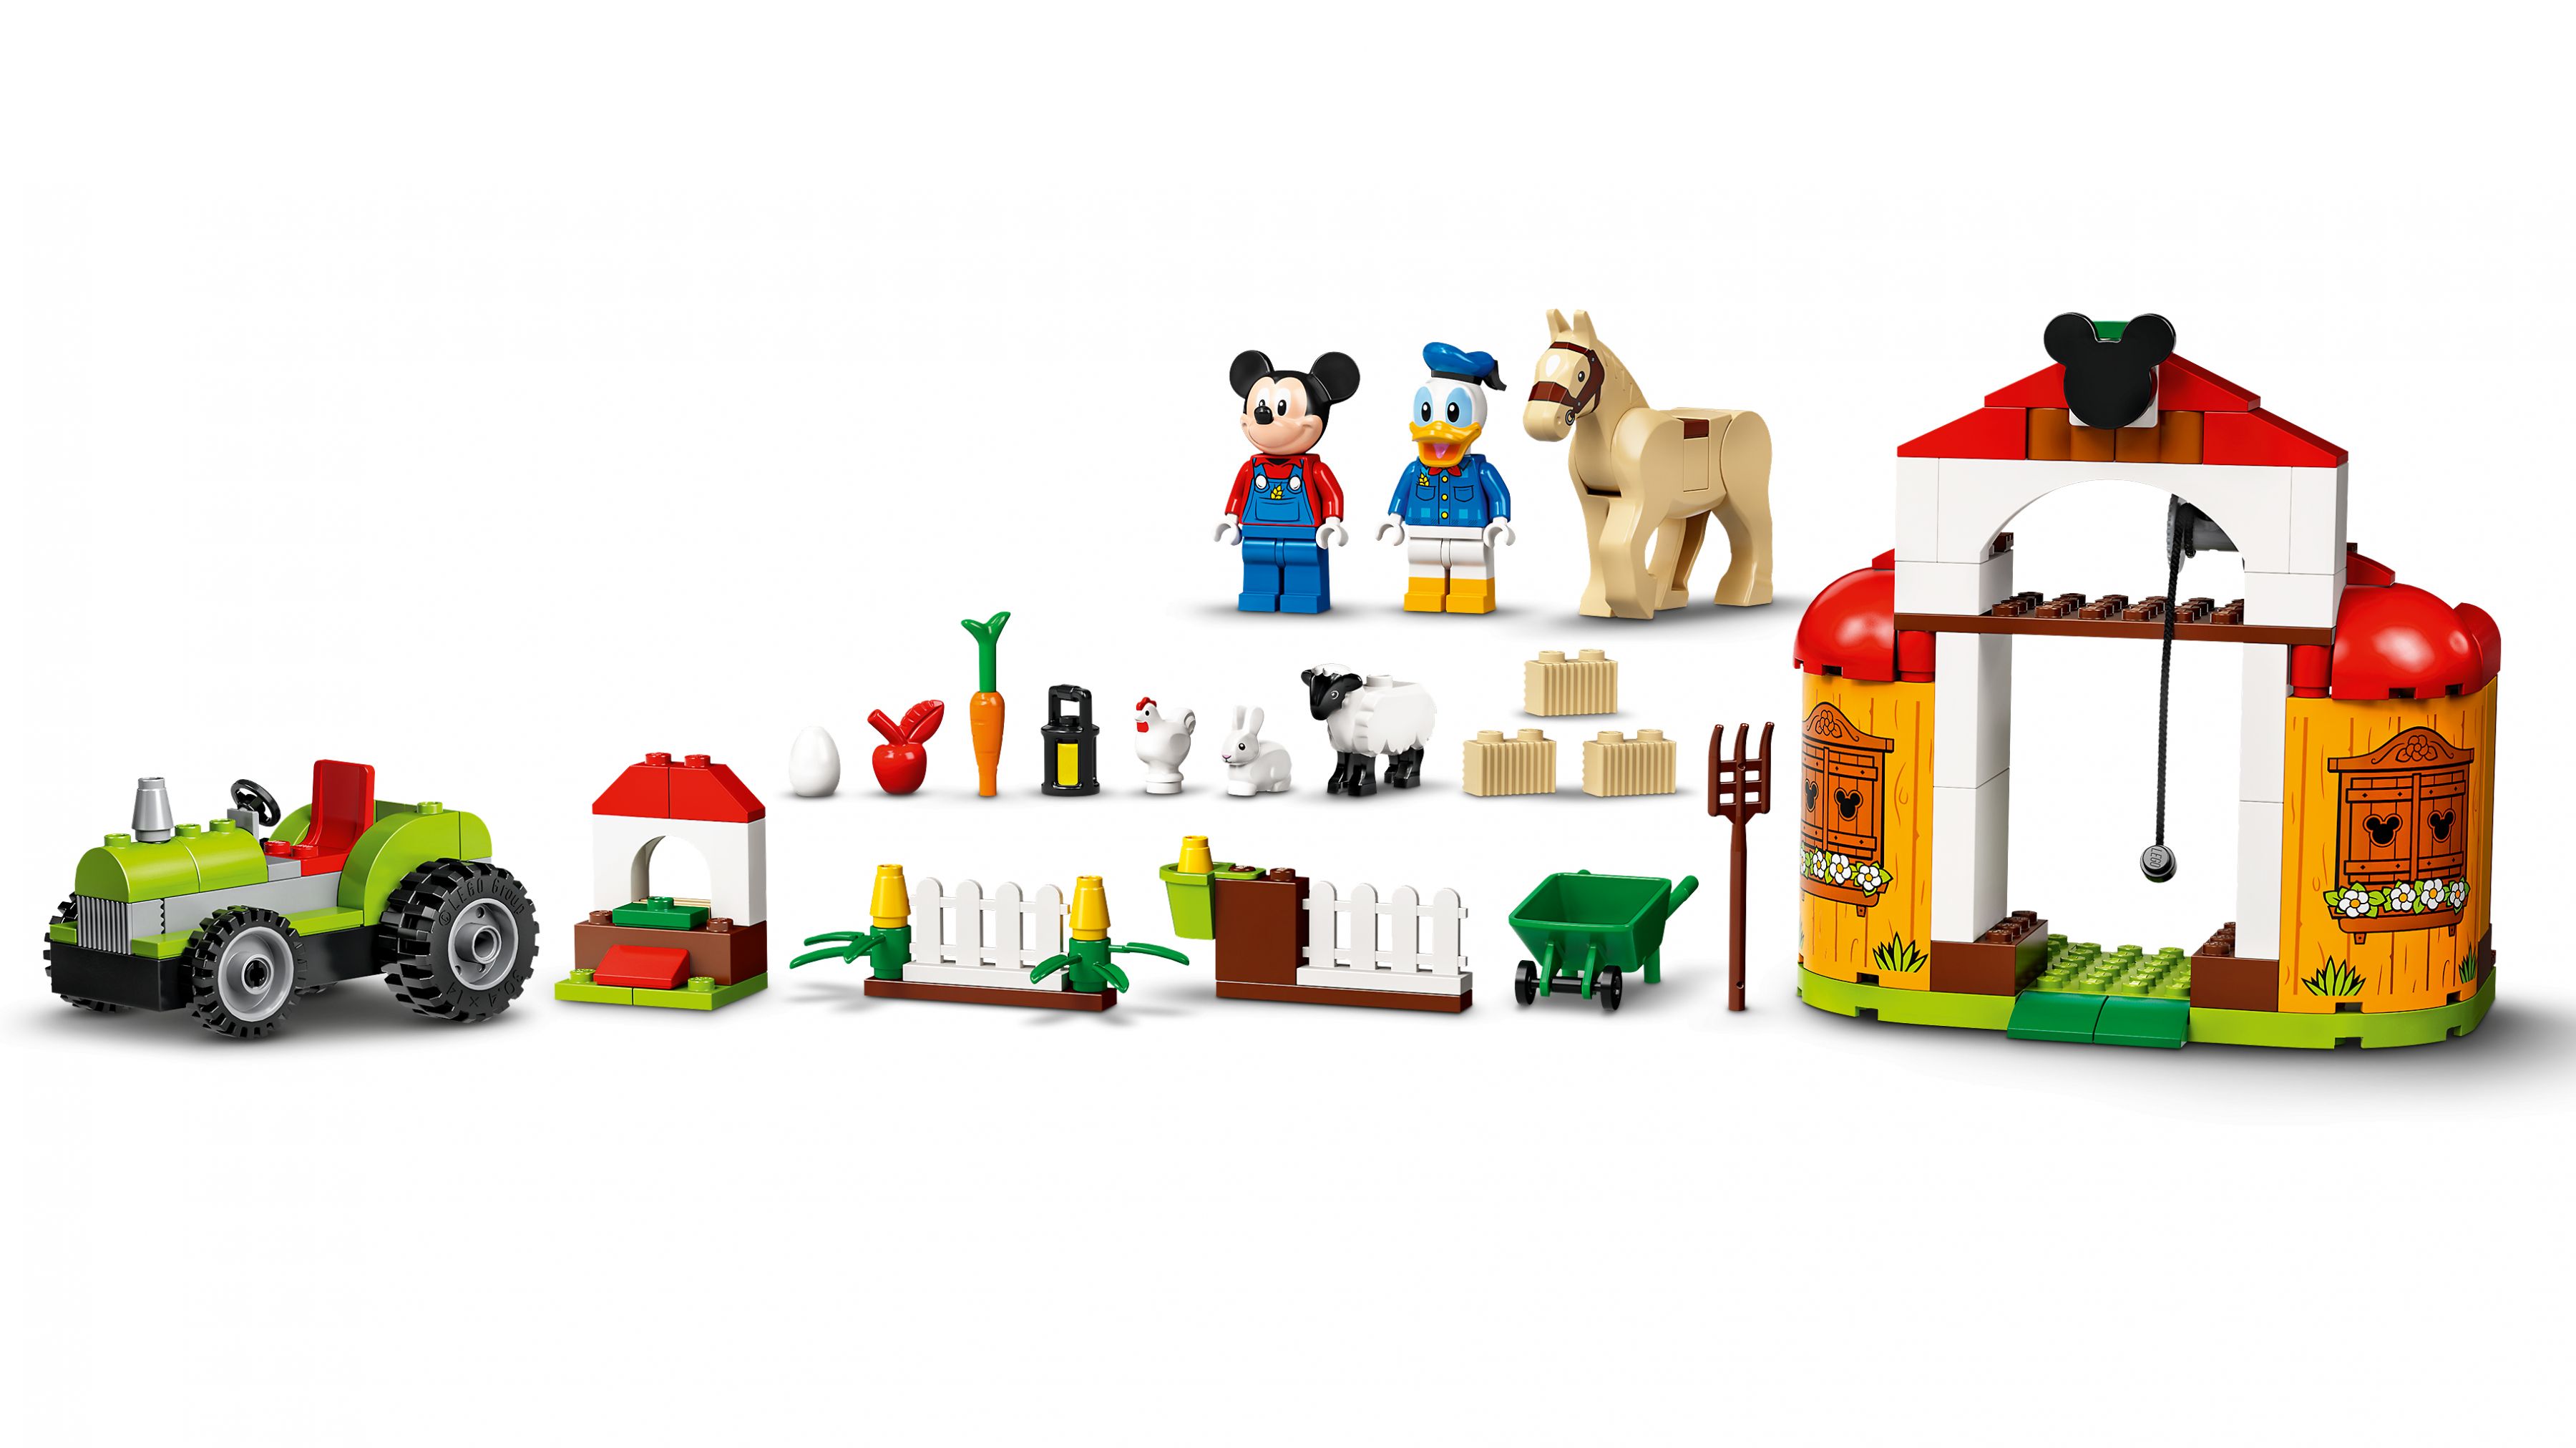 LEGO Disney 10775 Mickys und Donald Duck's Farm LEGO_10775_alt3.jpg